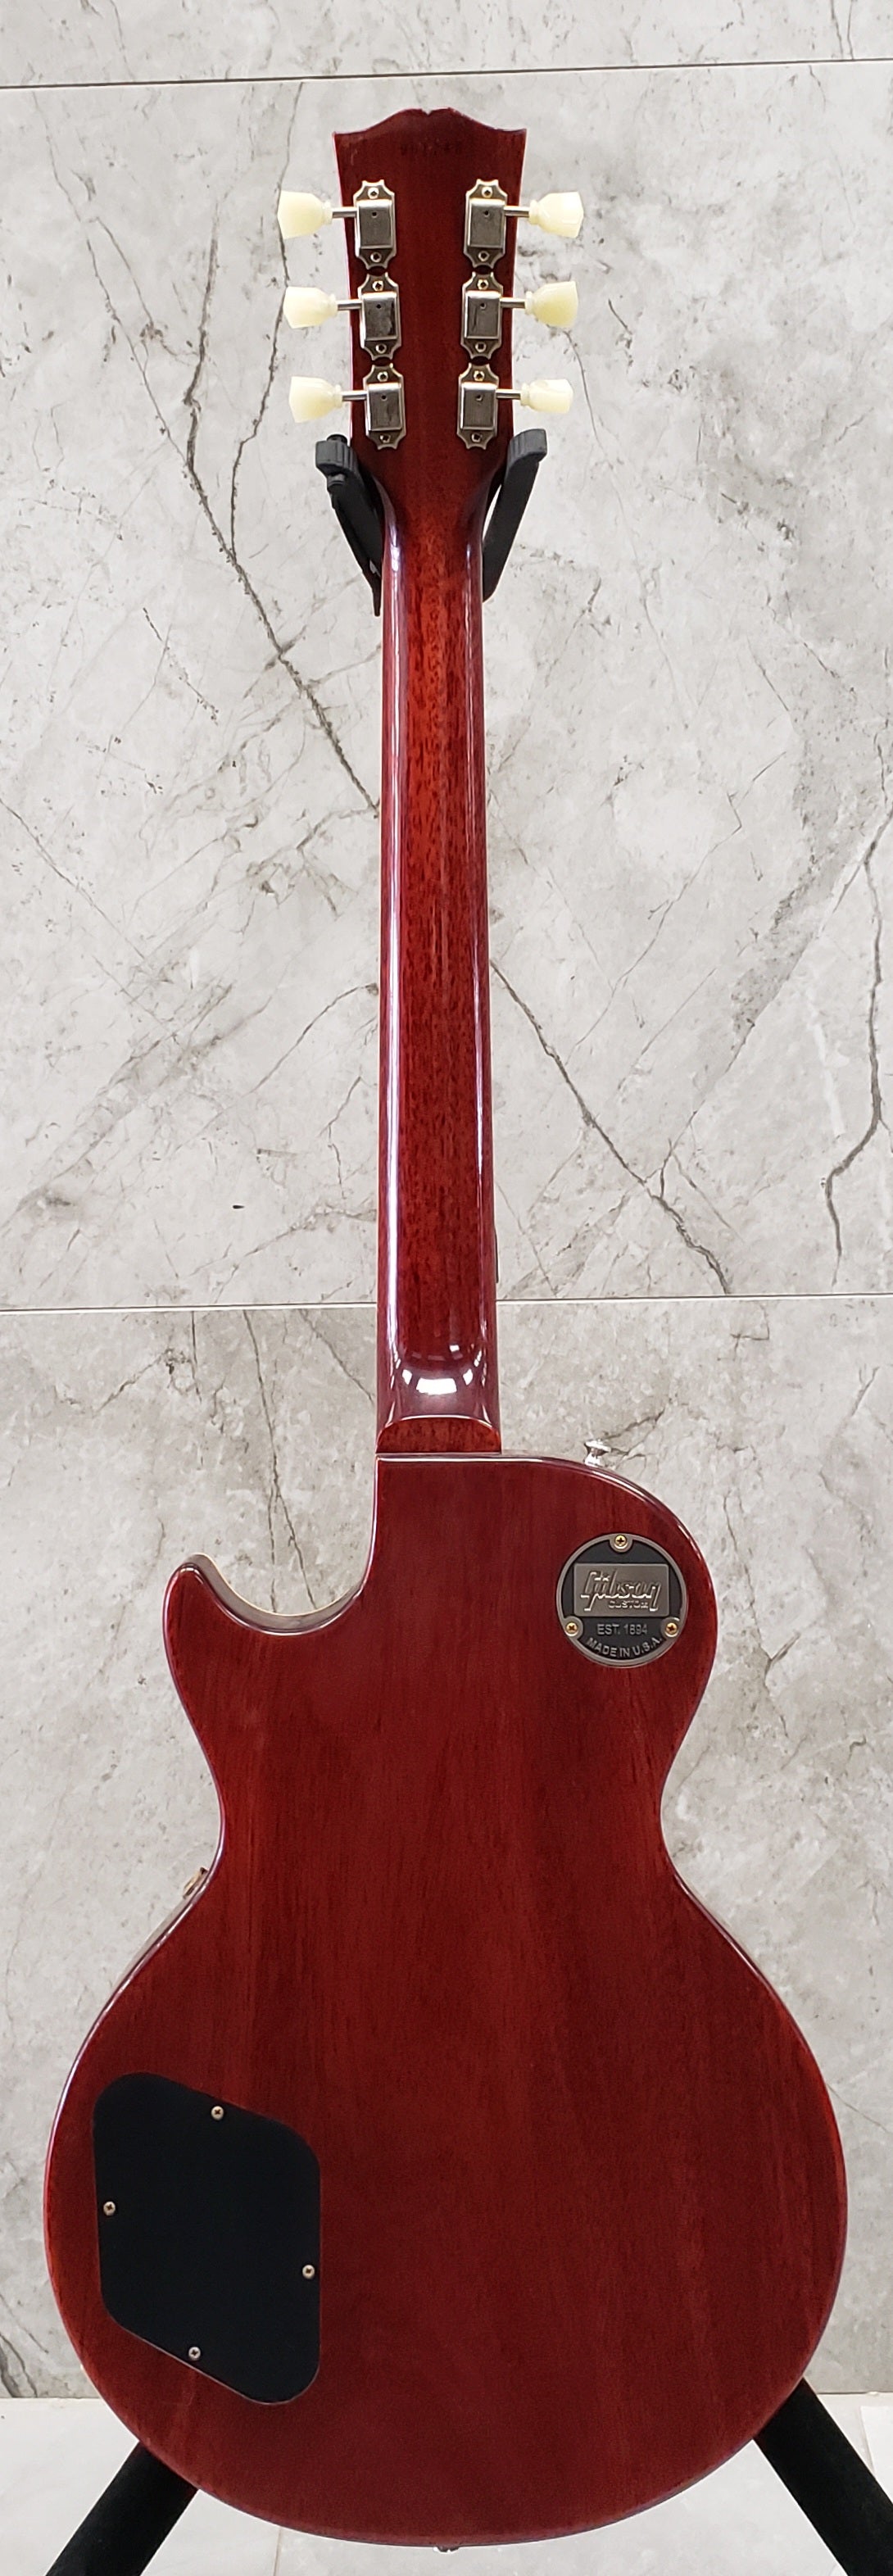 Gibson Custom Shop 1959 Les Paul Standard Reissue VOS Sunrise Tea - Nickel Hardware LPR59VOSRNH SERIAL NUMBER 901746 - 8.6 LBS